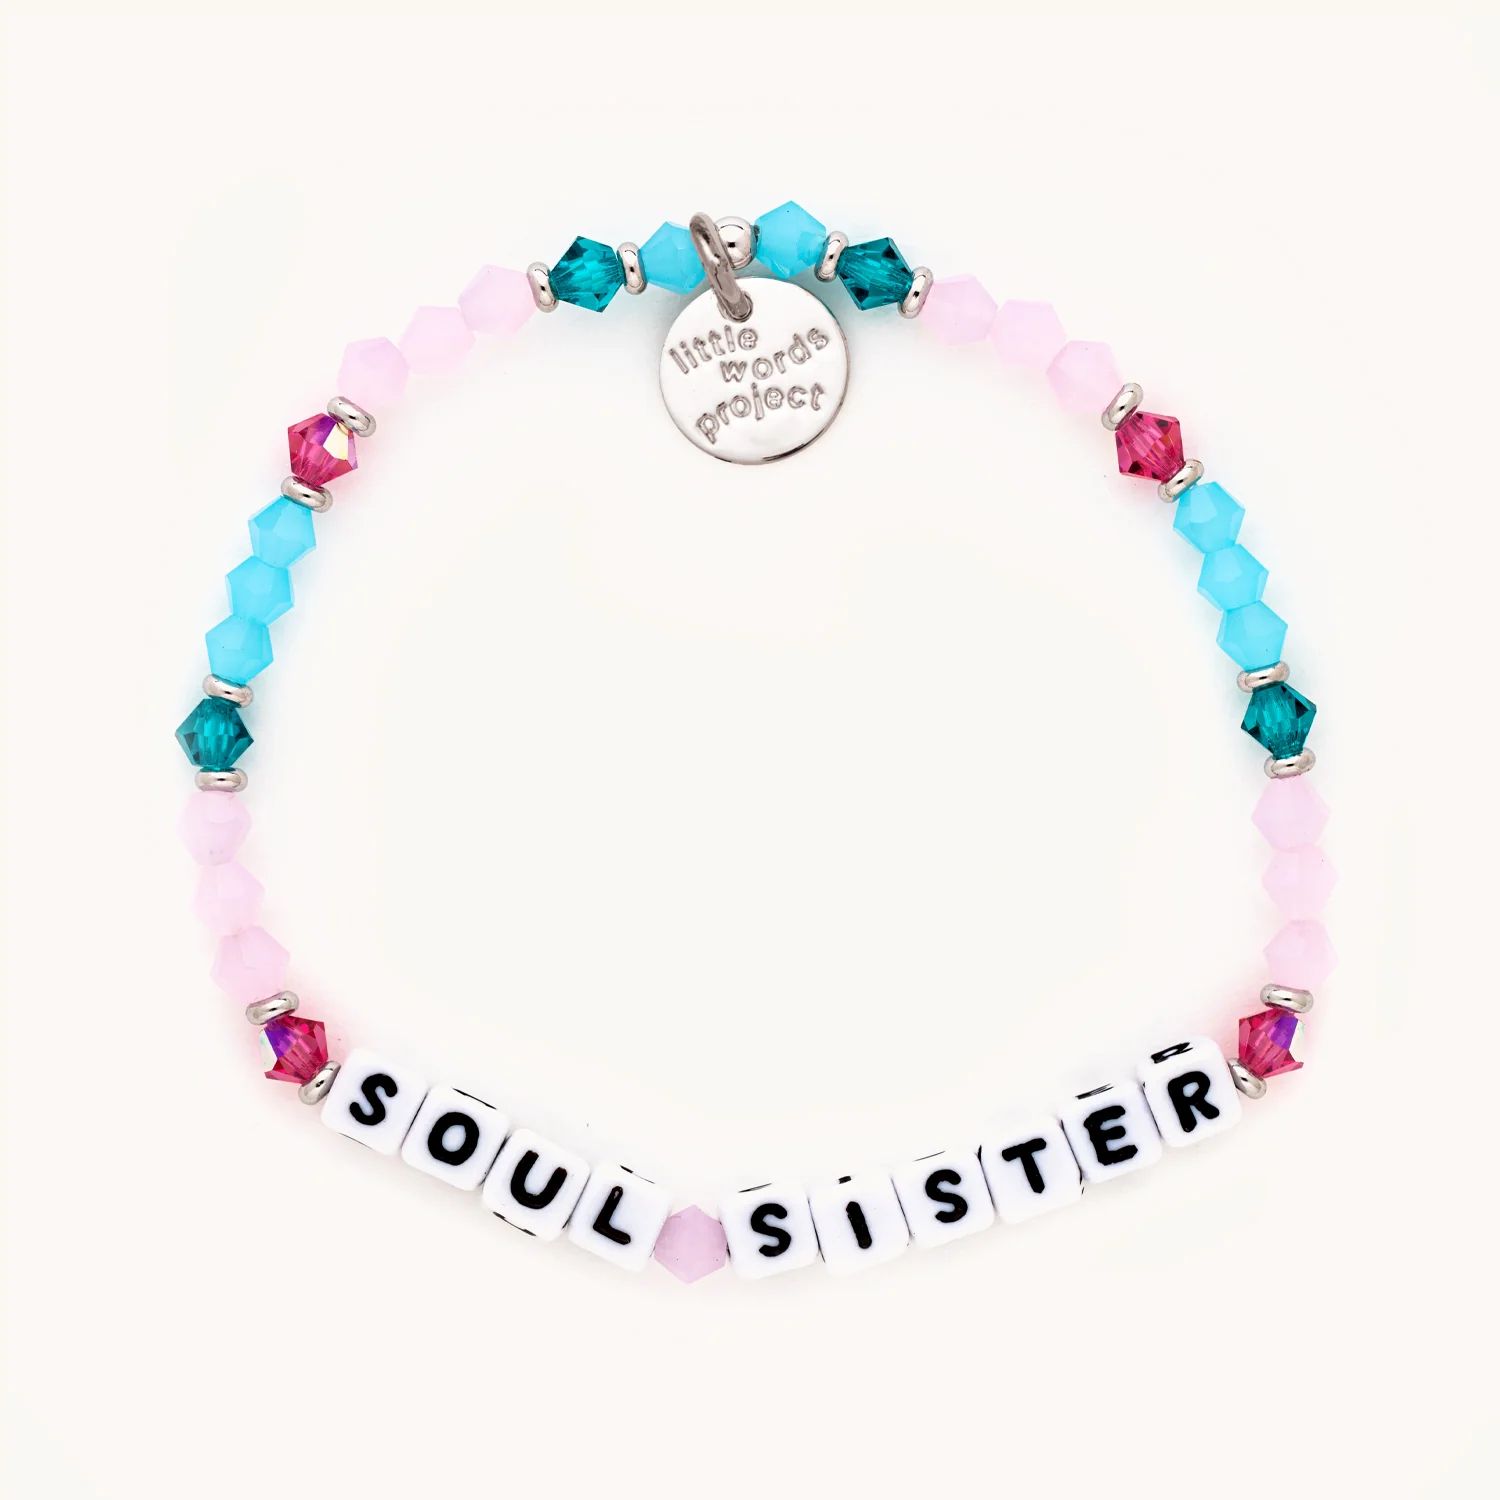 Soul Sister- Best Friends | Little Words Project